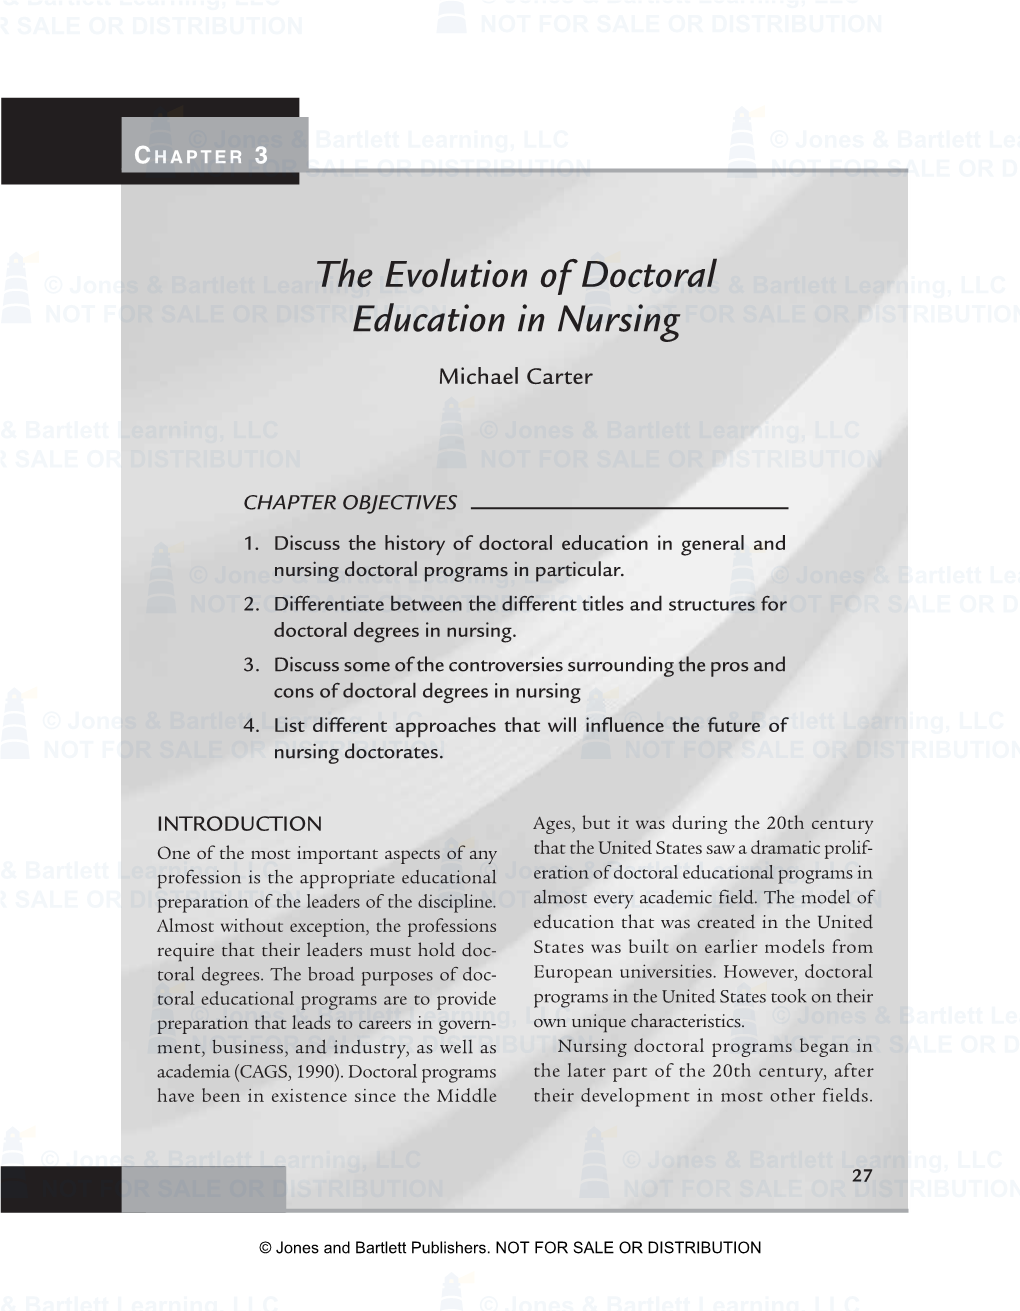 The Evolution of Doctoral Education in Nursing